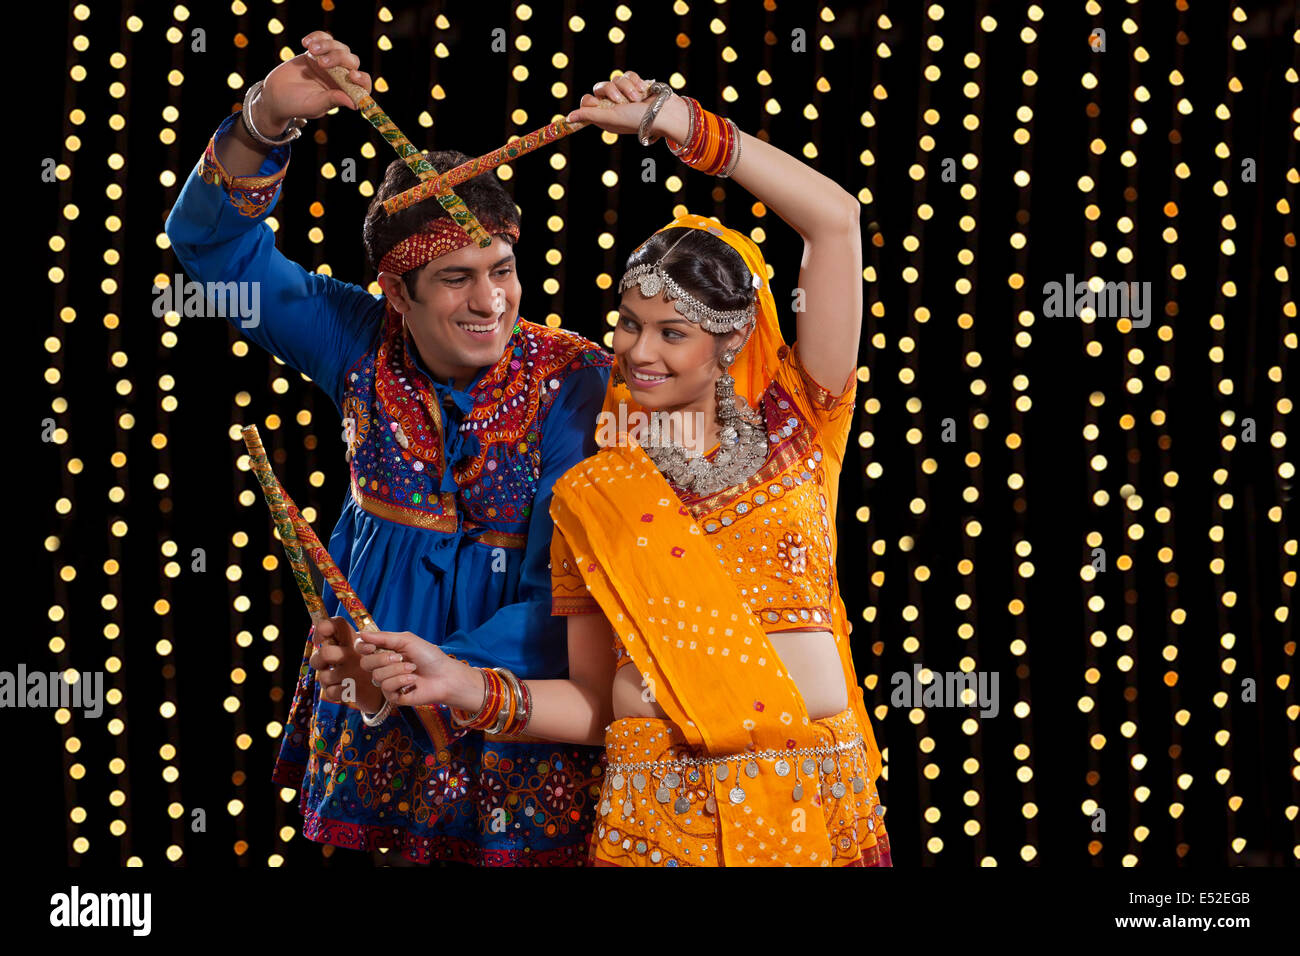 Dandiya night party flyer. Illustration of couple dandiya dance pose on the  indian festival of Navratri. Stock Vector | Adobe Stock